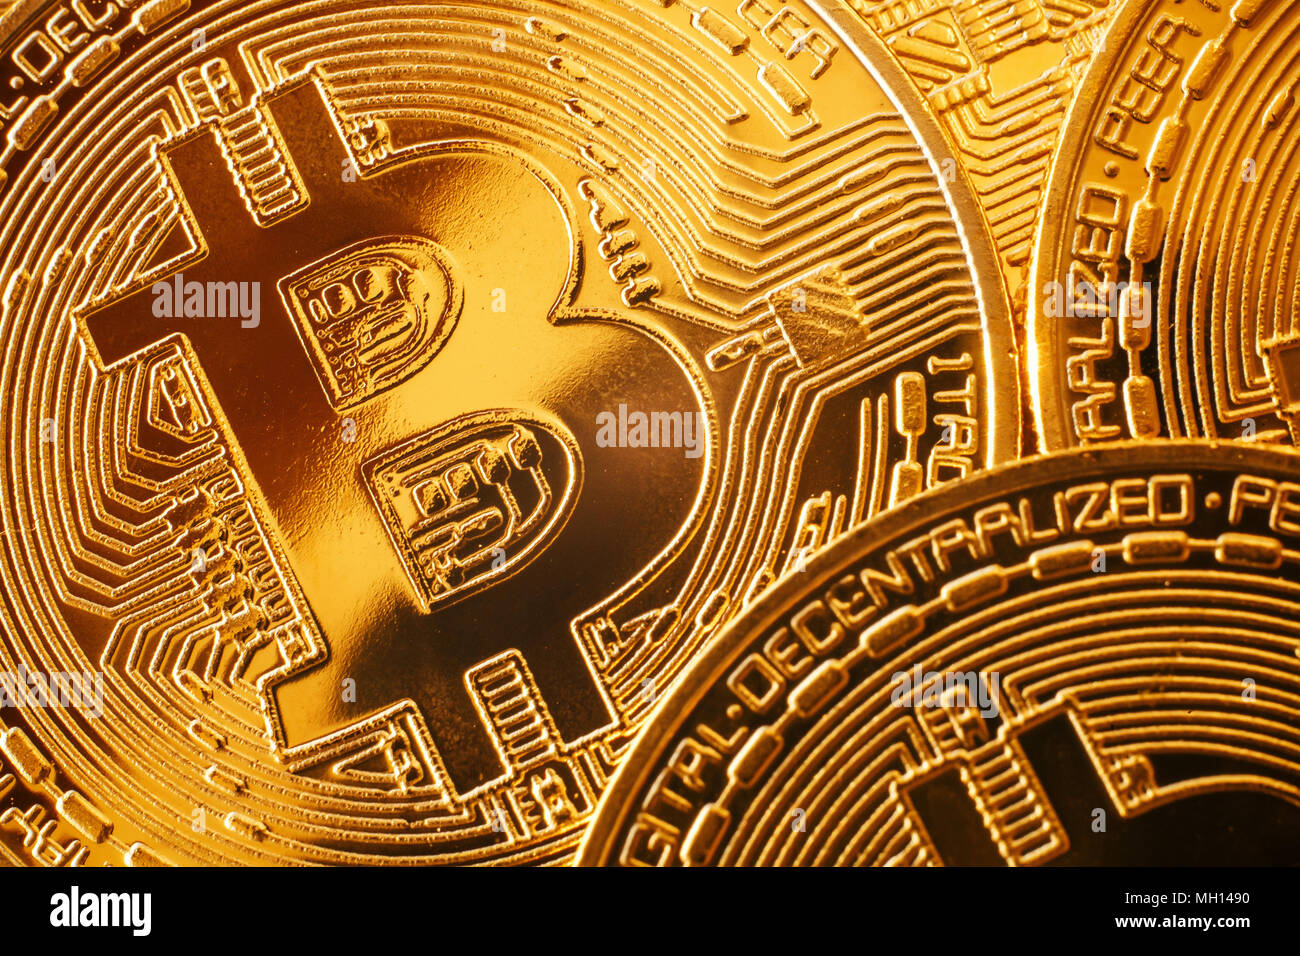 Glanzend Goldenen Bitcoins Muster Gold Geld Wallpaper Digitale Wahrung Bit Munze Cryptocurrency Konzept Platz Fur Text Digitales Geld Investm Stockfotografie Alamy